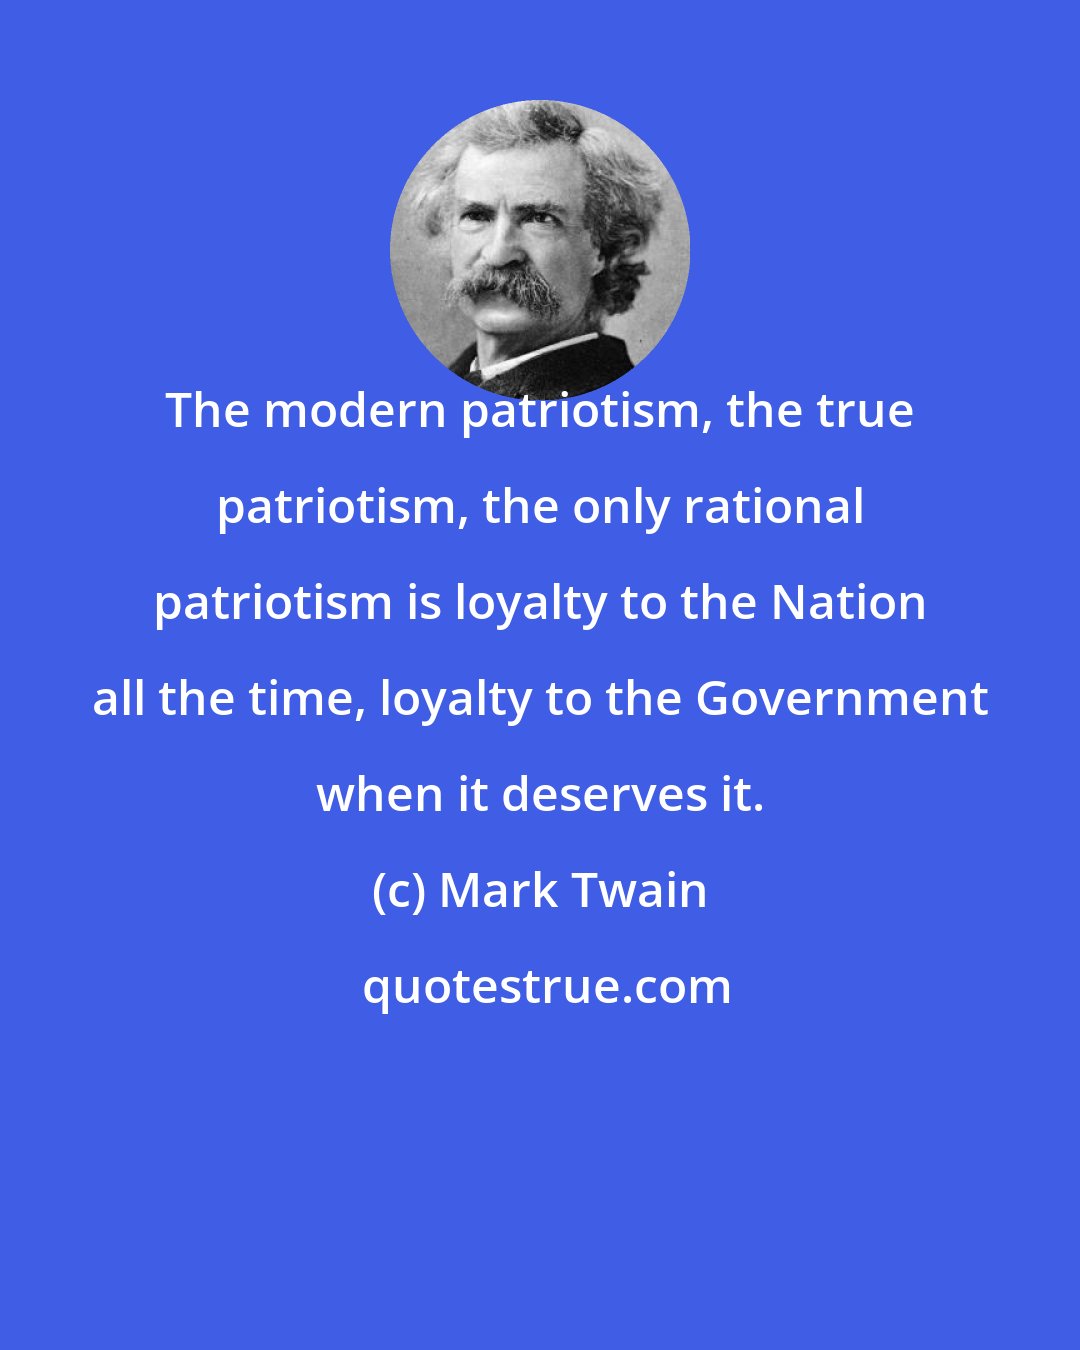 Mark Twain: The modern patriotism, the true patriotism, the only rational patriotism is loyalty to the Nation all the time, loyalty to the Government when it deserves it.